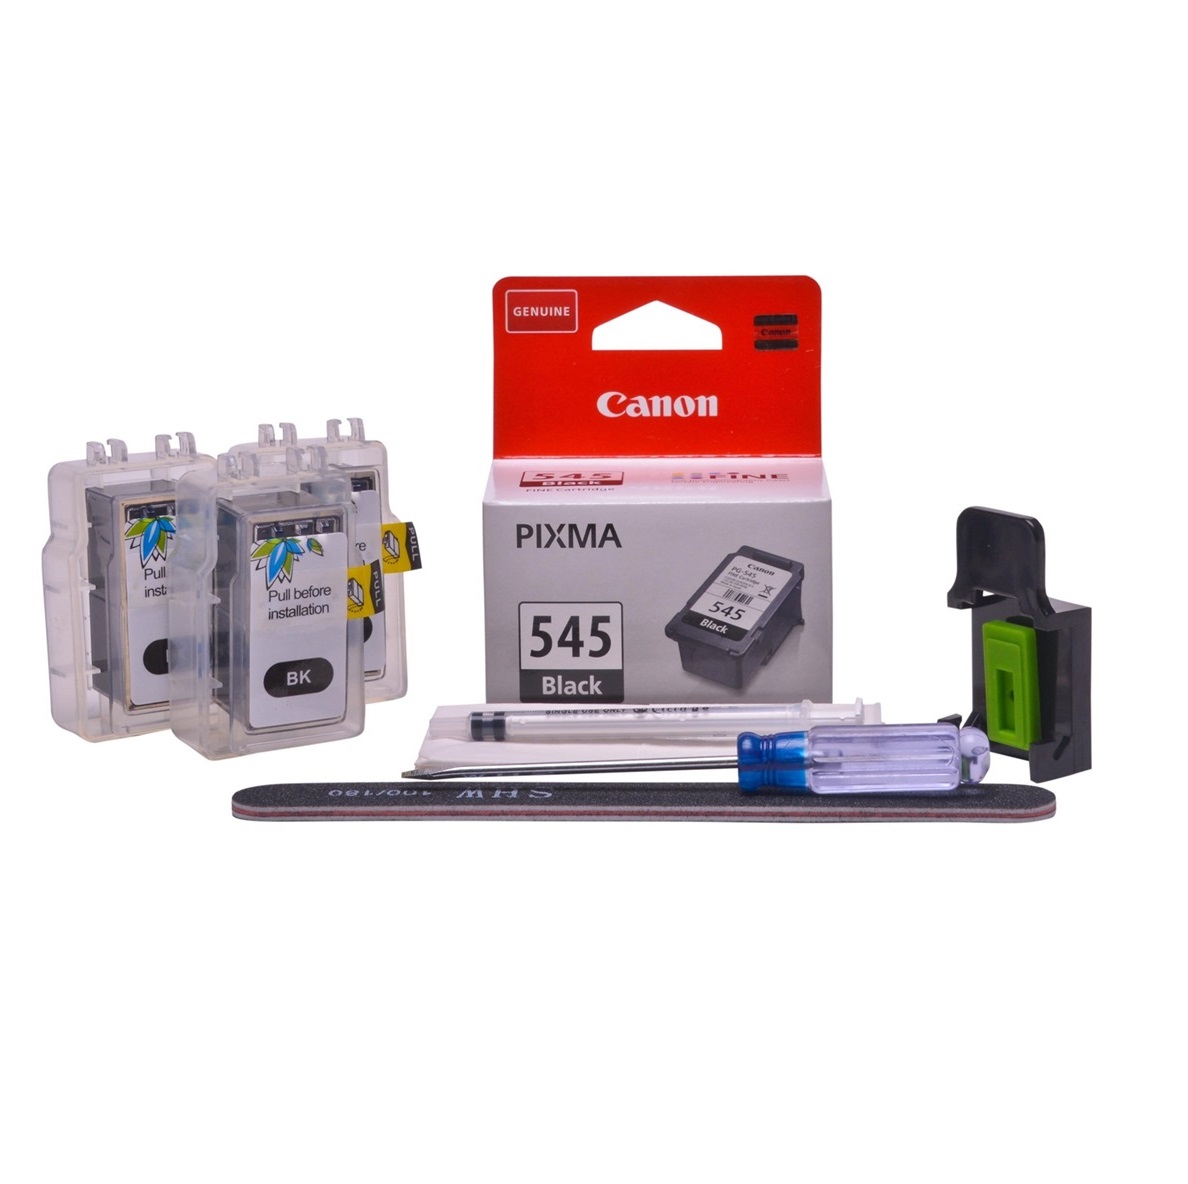 Refillable pigment Cheap printer cartridges for Canon Pixma TS3350 8287B001  PG-545 Pigment Black